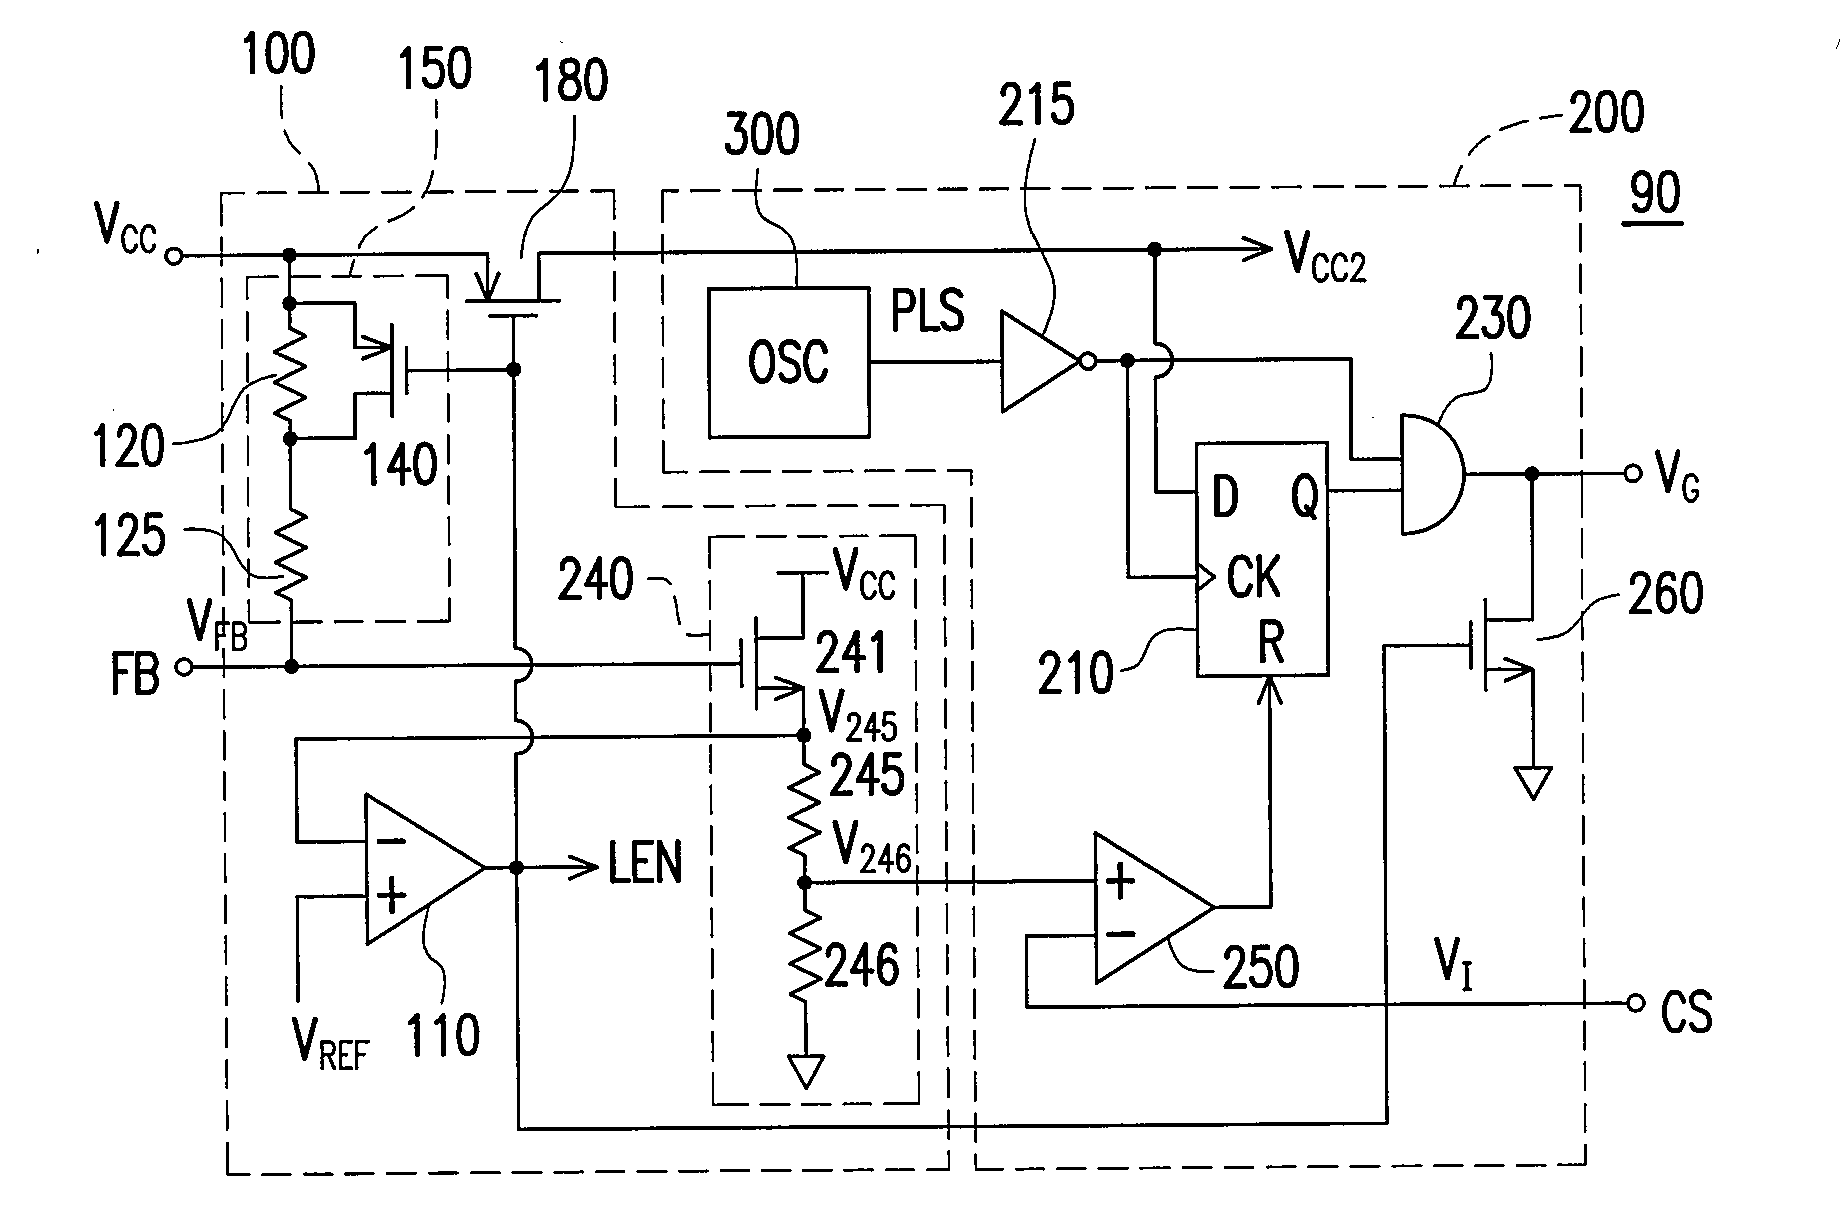 Control circuit having an impedance modulation controlling power converter for saving power